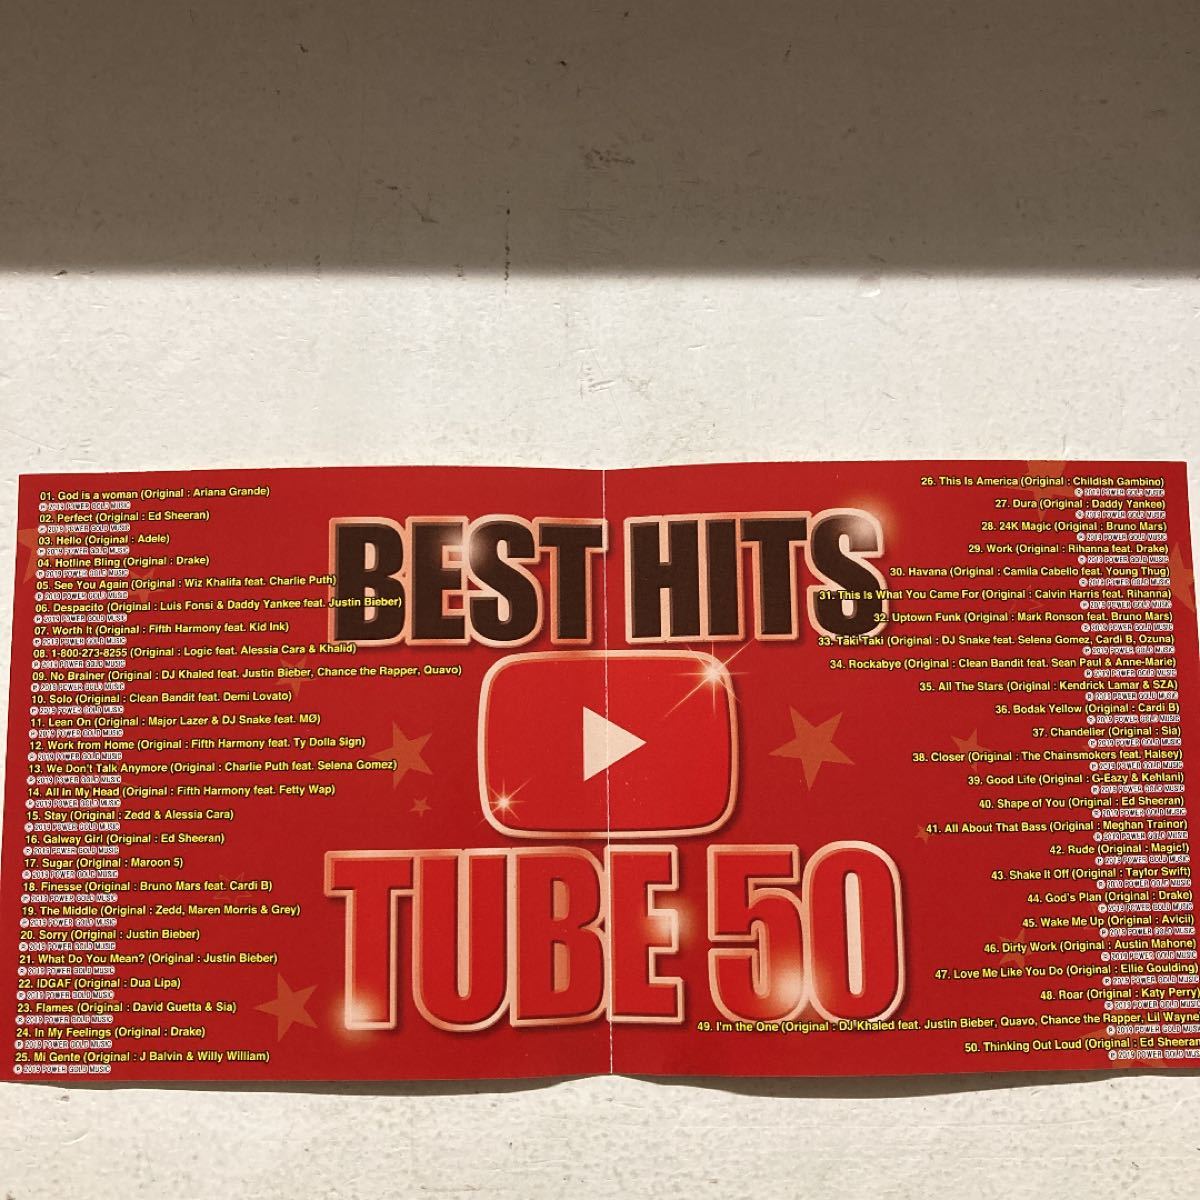 DJ MASTER / BEST HITS TUBE 50 [CD]